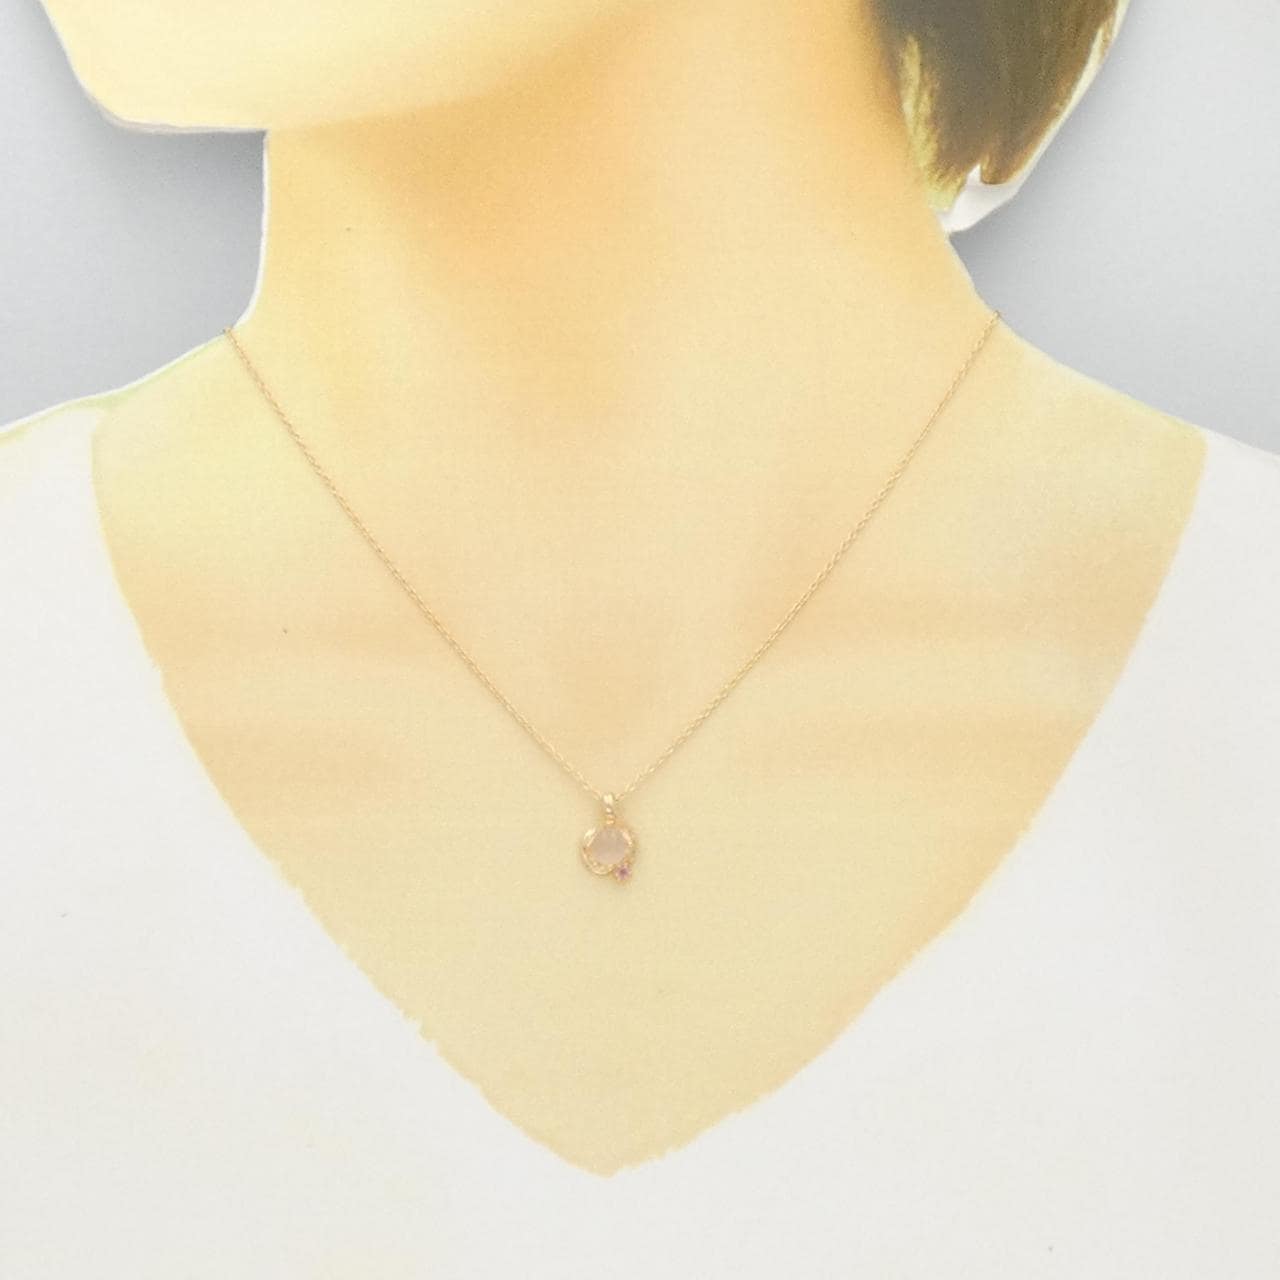 K18PG rose Quartz necklace